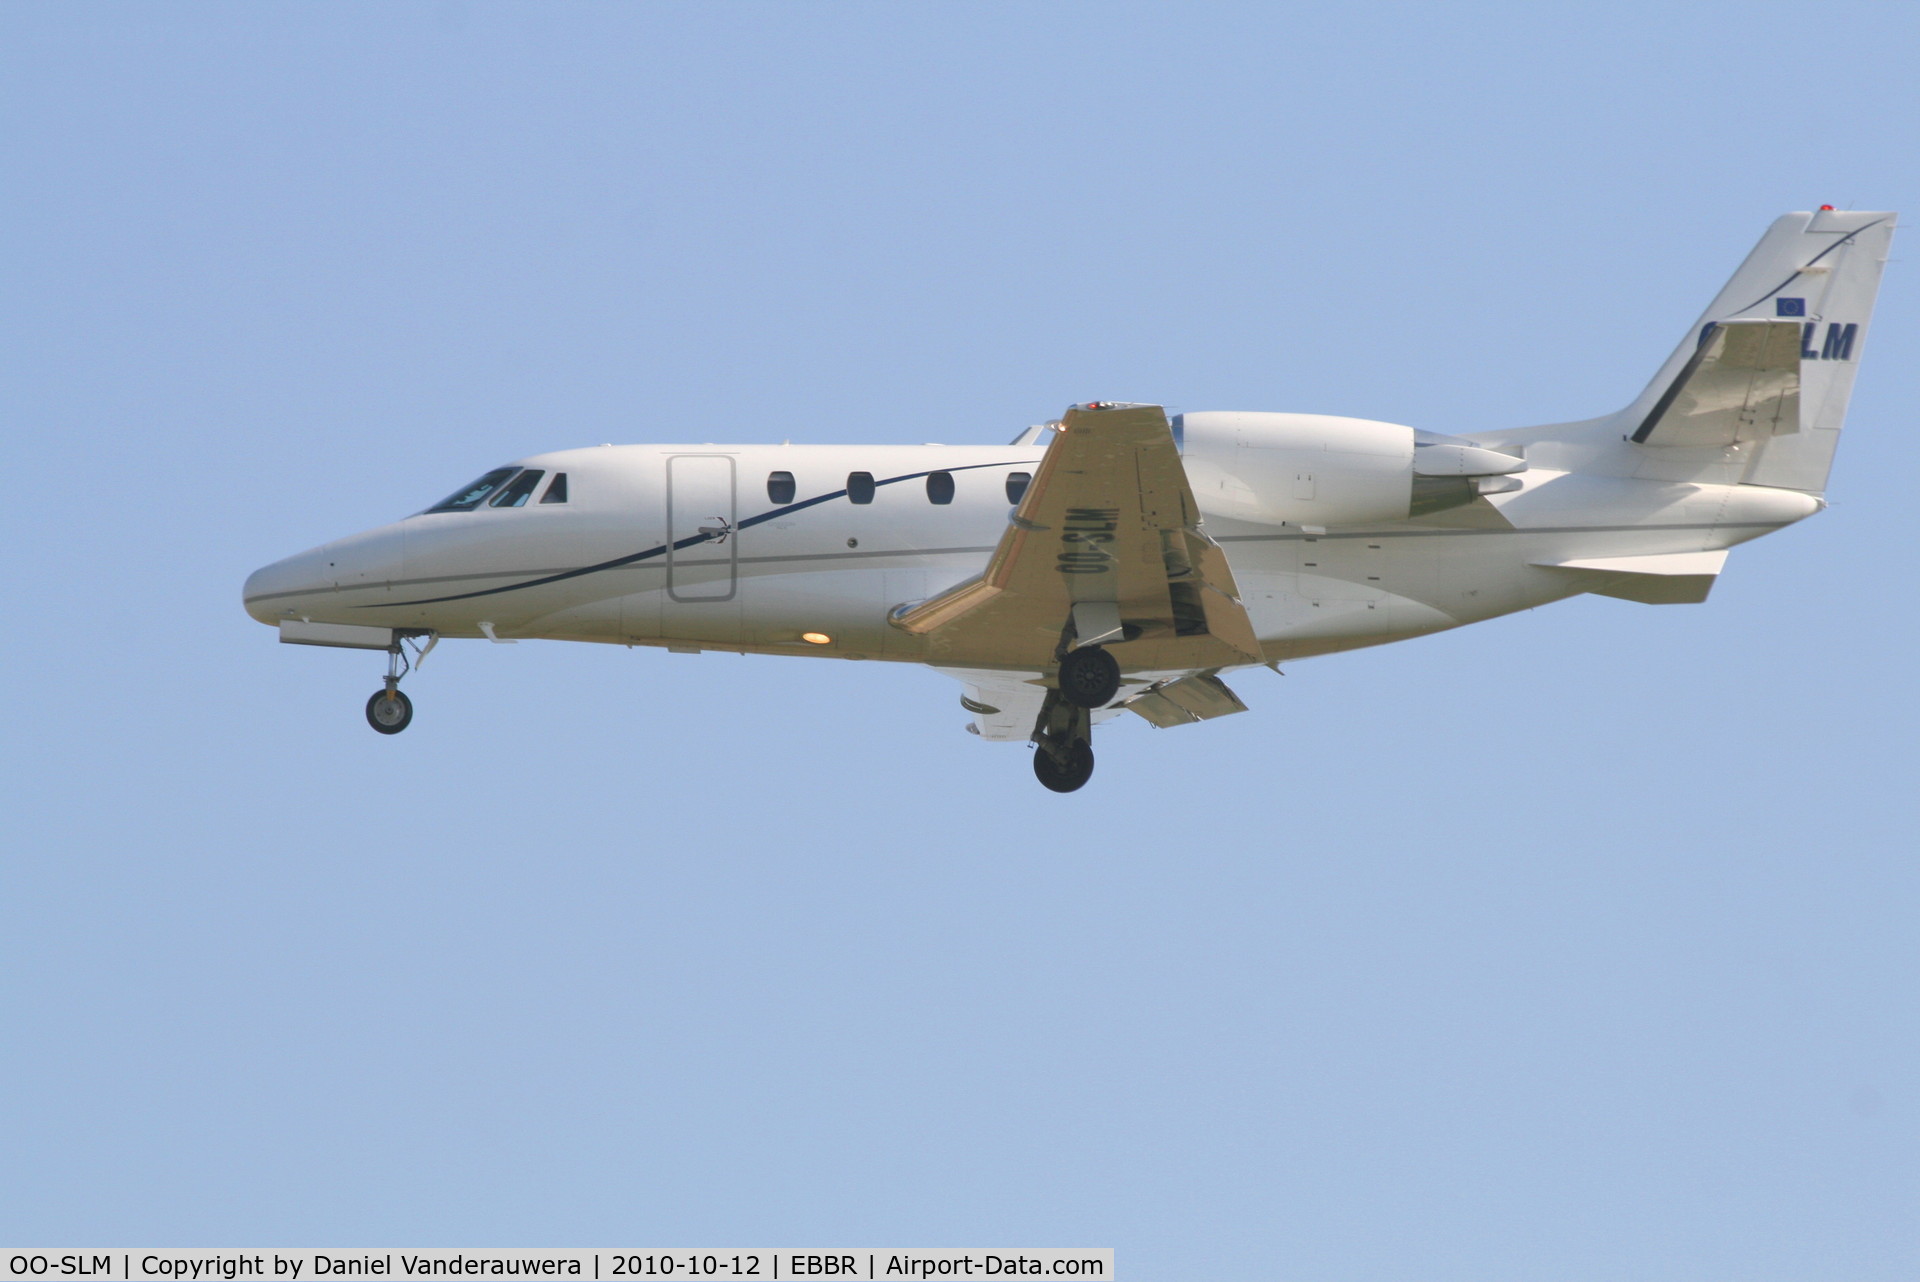 OO-SLM, 2008 Cessna 560XL Citation XLS C/N 560-5781, Arrival to RWY 02